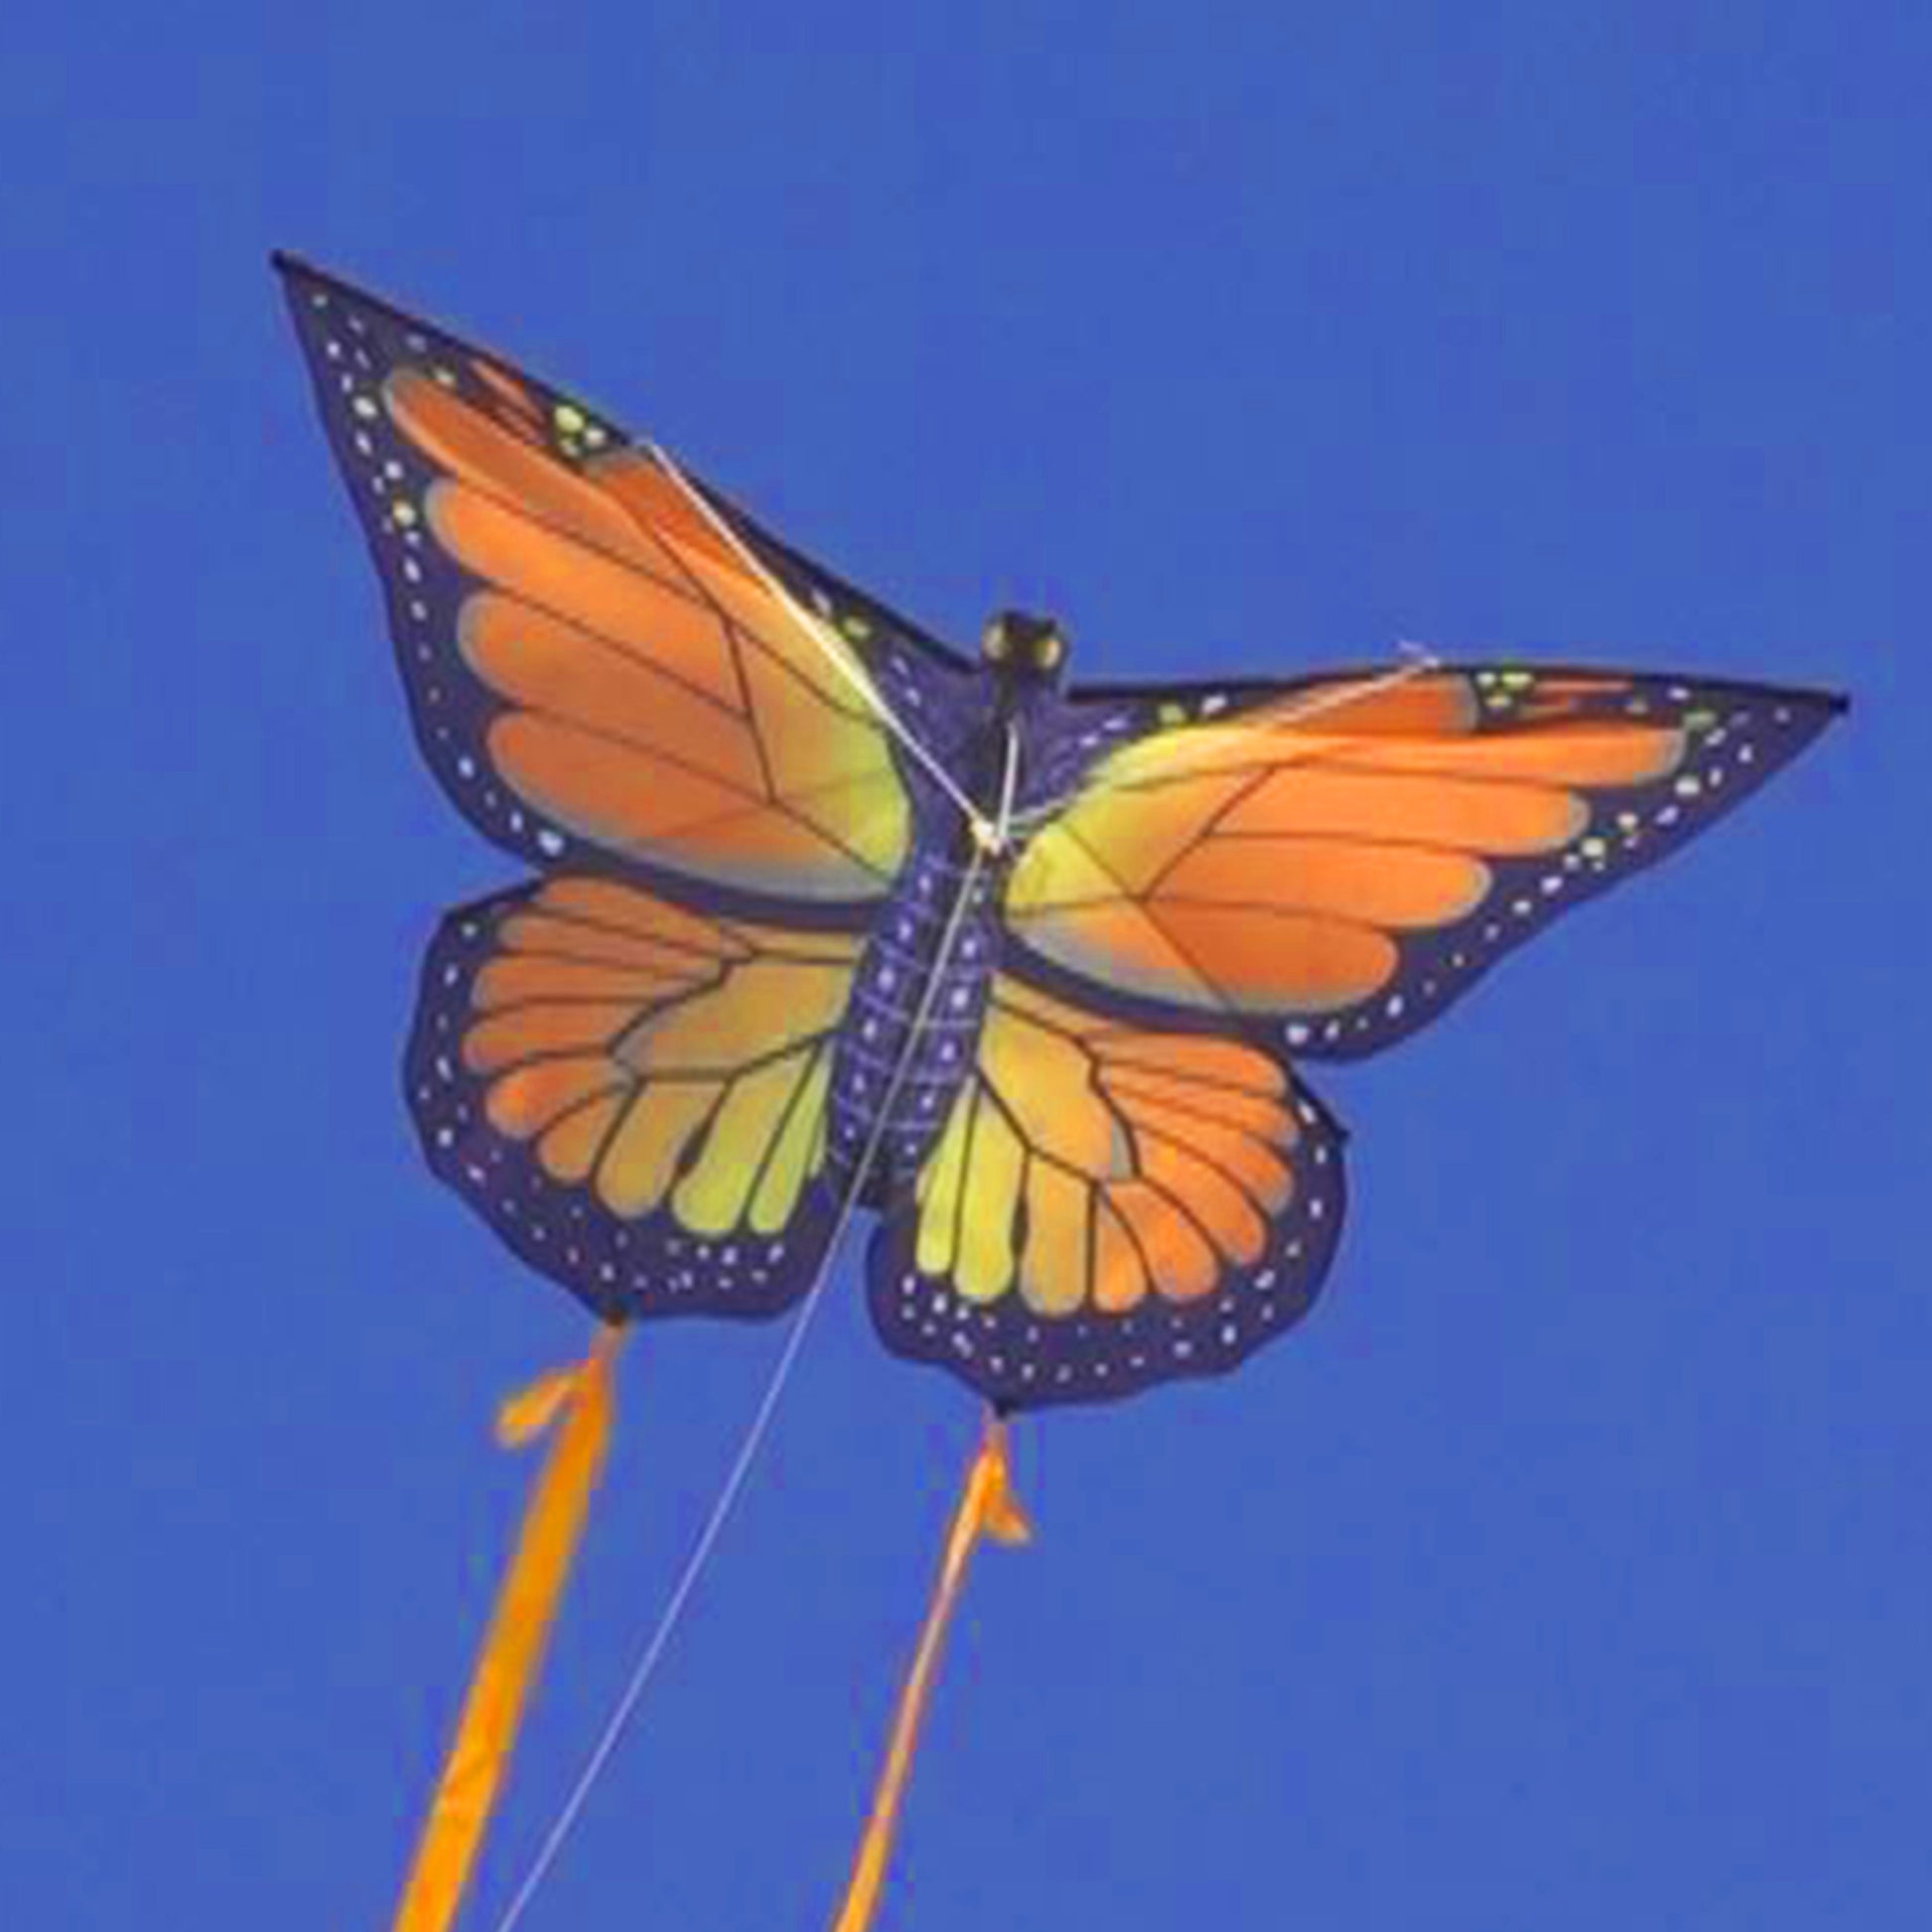 windnsun butterfly monarch nylon kite flying